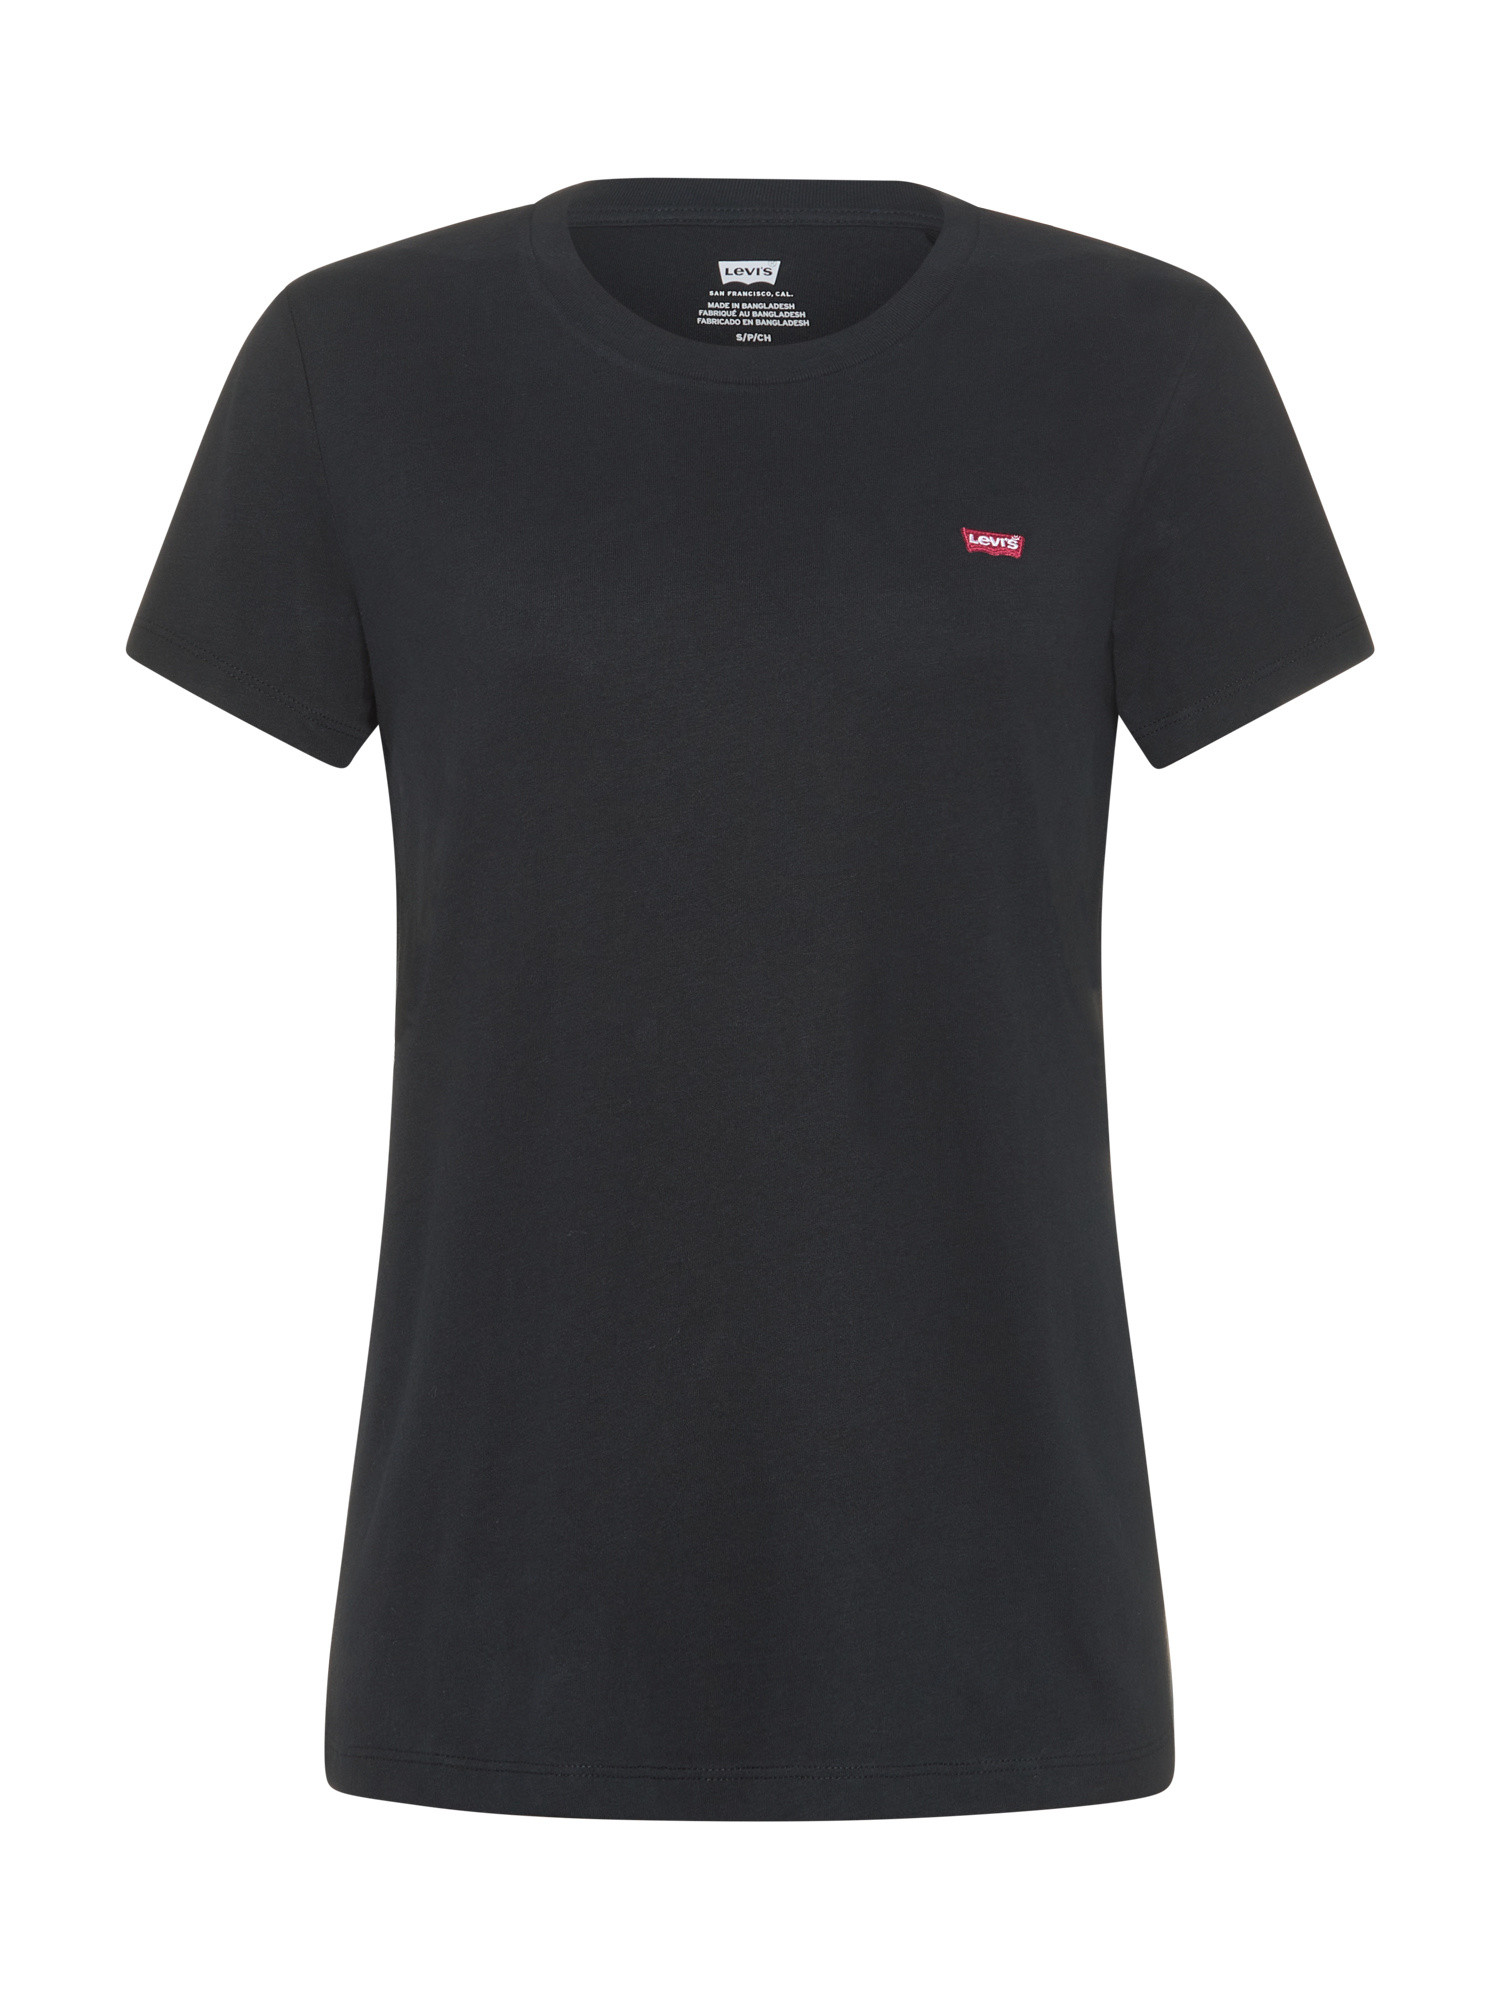 Levi's - Cotton T-shirt with logo, Black, large image number 0